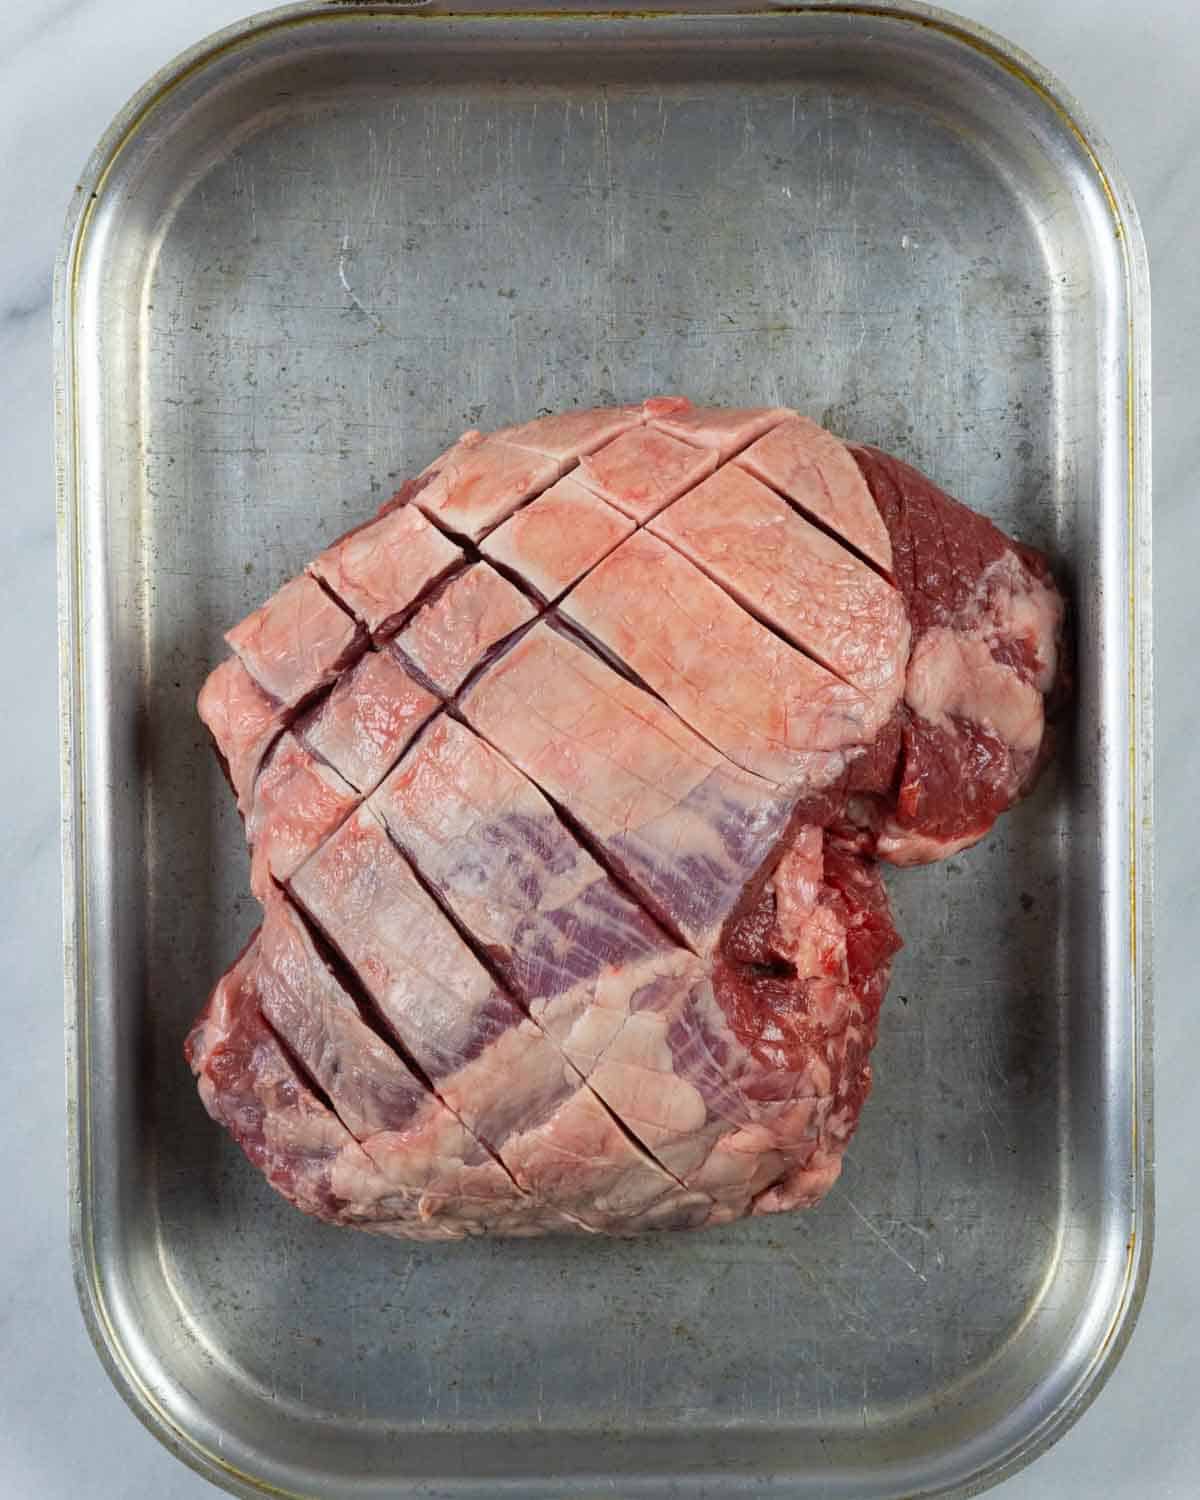 De-netted boneless lamb leg with cross-hatched scores cut into fat cap.